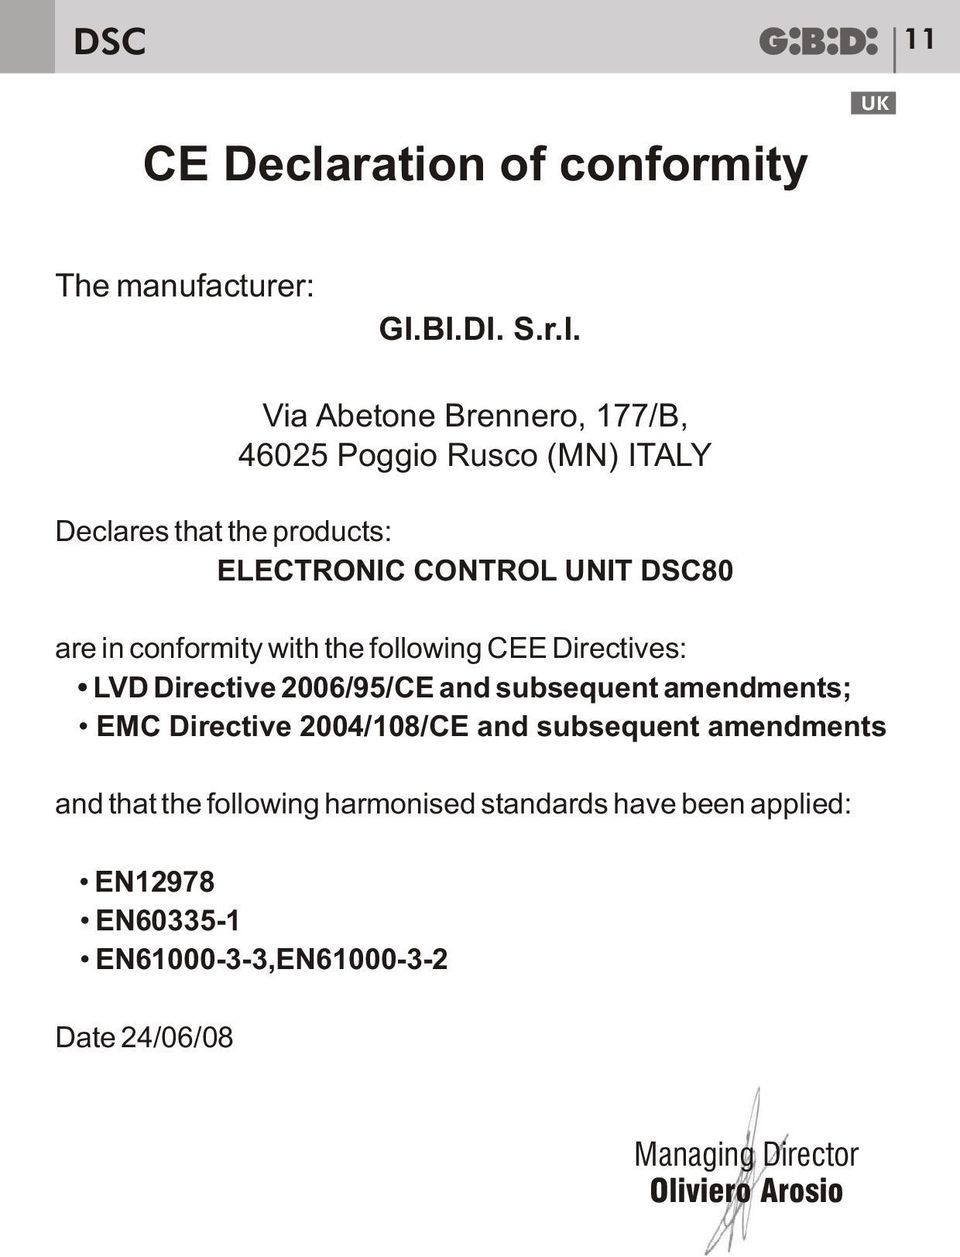 Via Abetone Brennero, 177/B, 46025 Poggio Rusco (MN) ITALY Declares that the products: ELECTRONIC CONTROL UNIT DSC80 are in